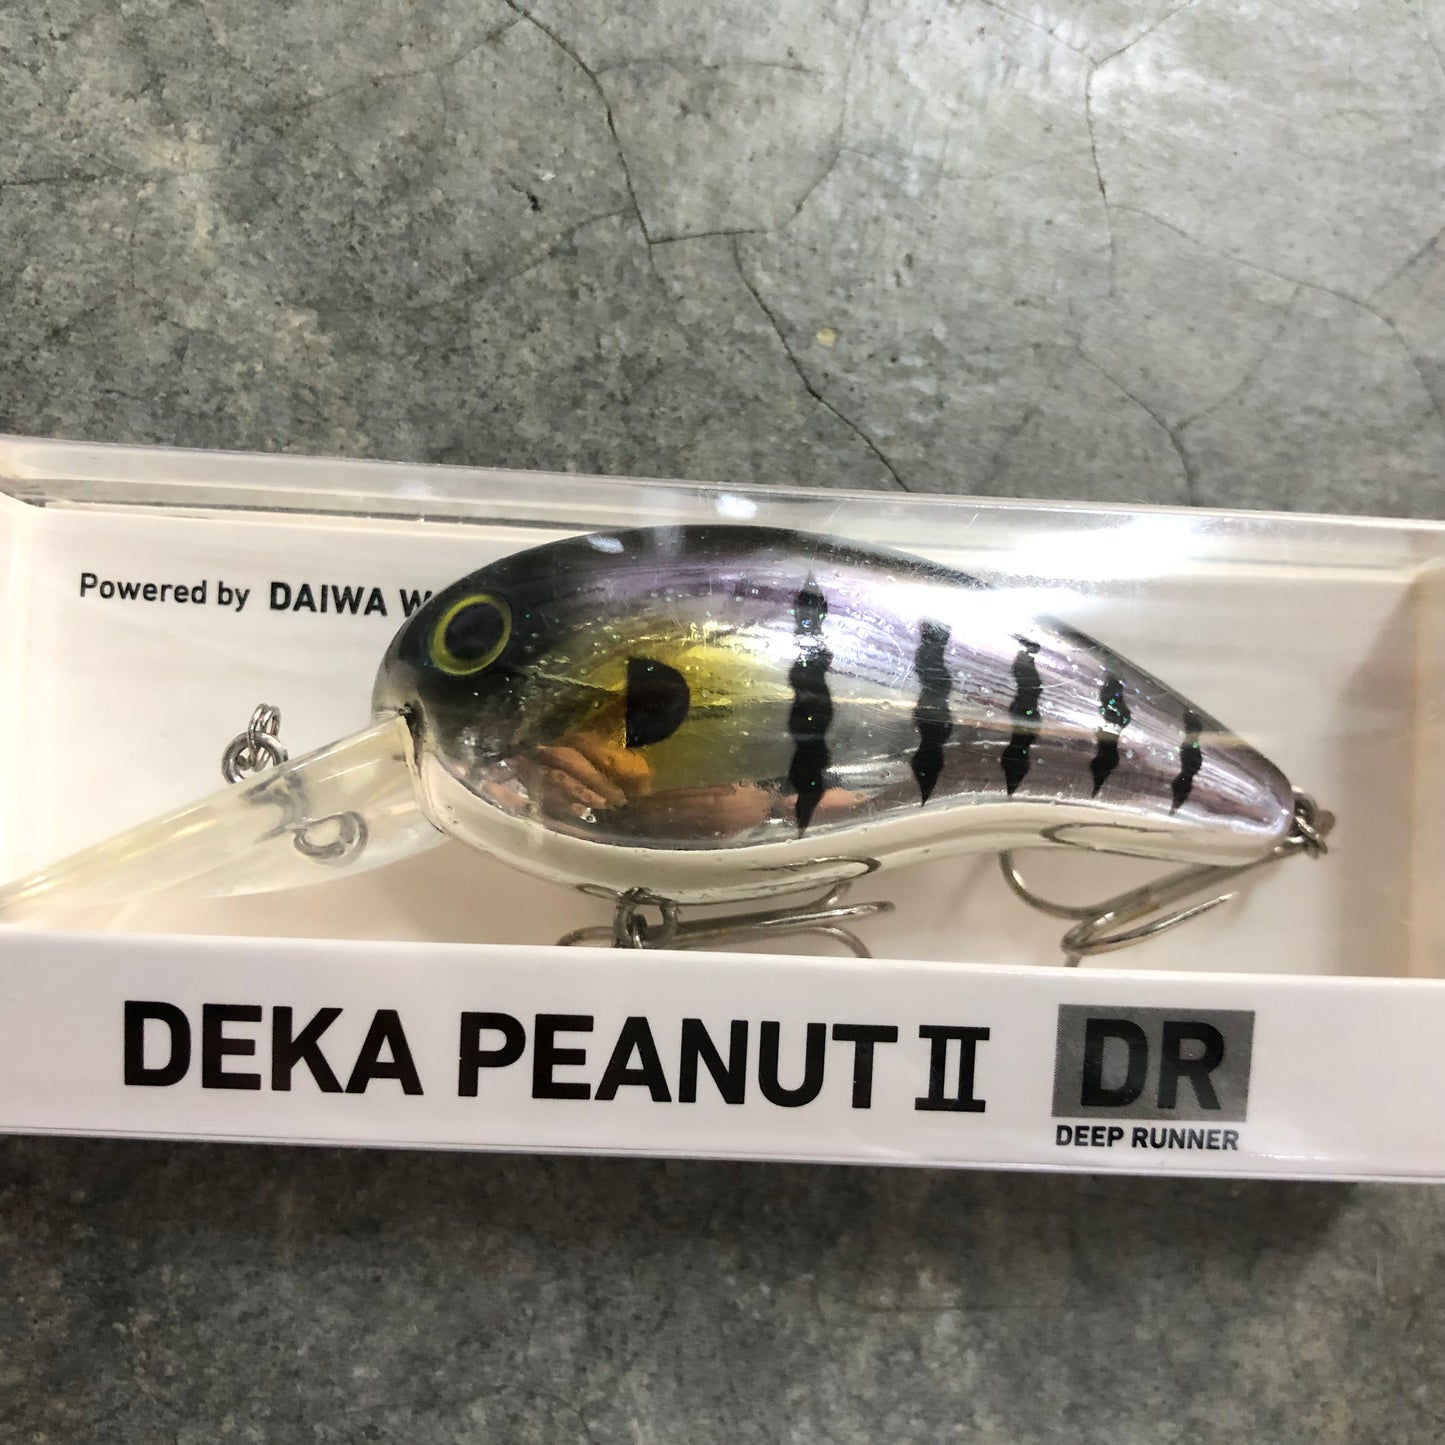 Deka Peanut II